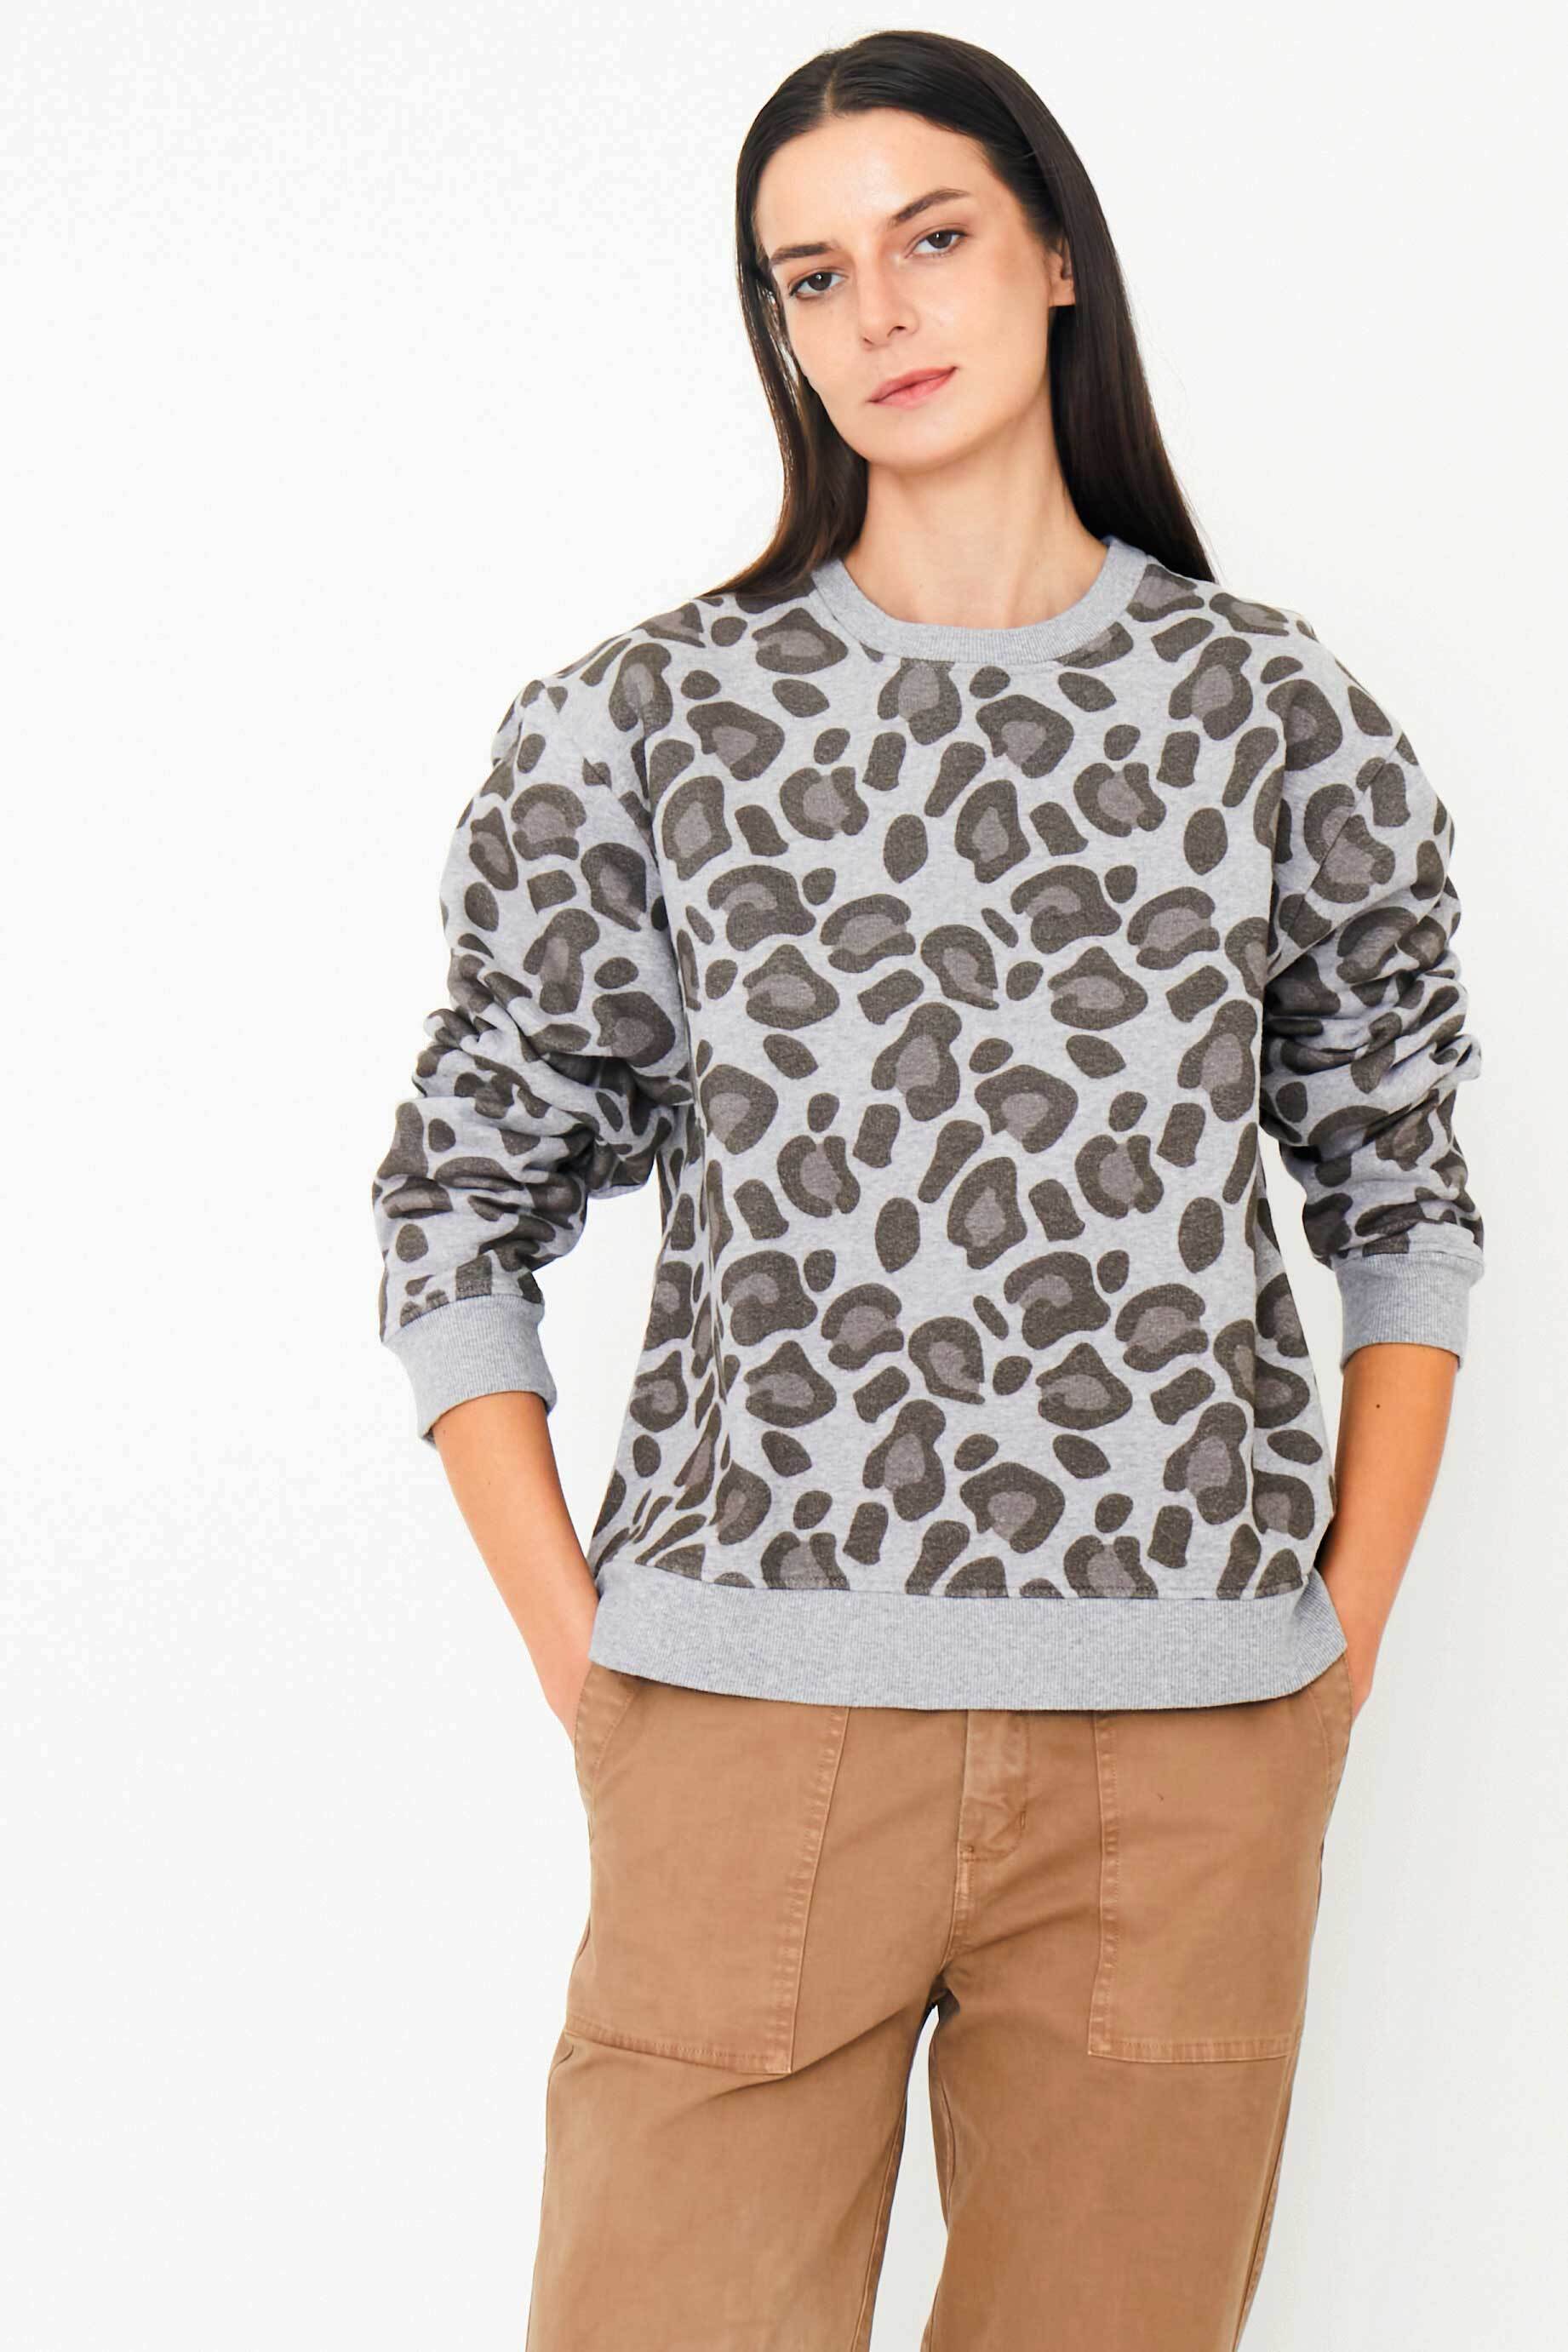 The Oversized All Over Heart Sweatshirt - Heather Grey Size Xs by KULE